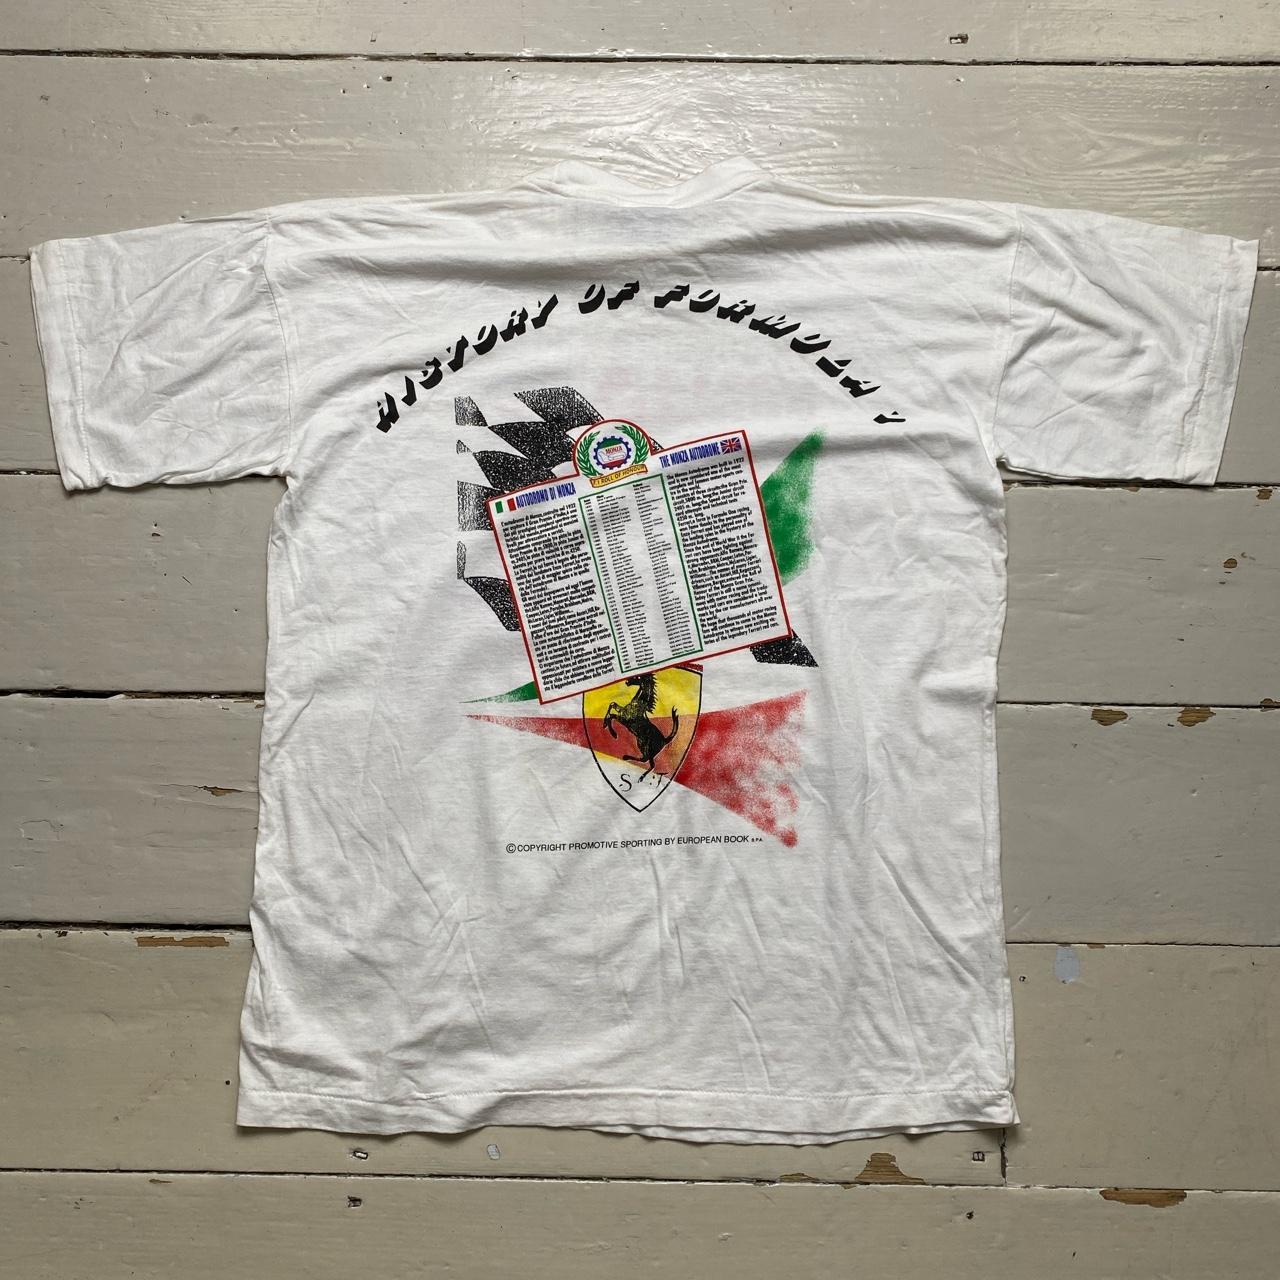 Monza Formula 1 Ferrari Vintage Single Stitch T Shirt